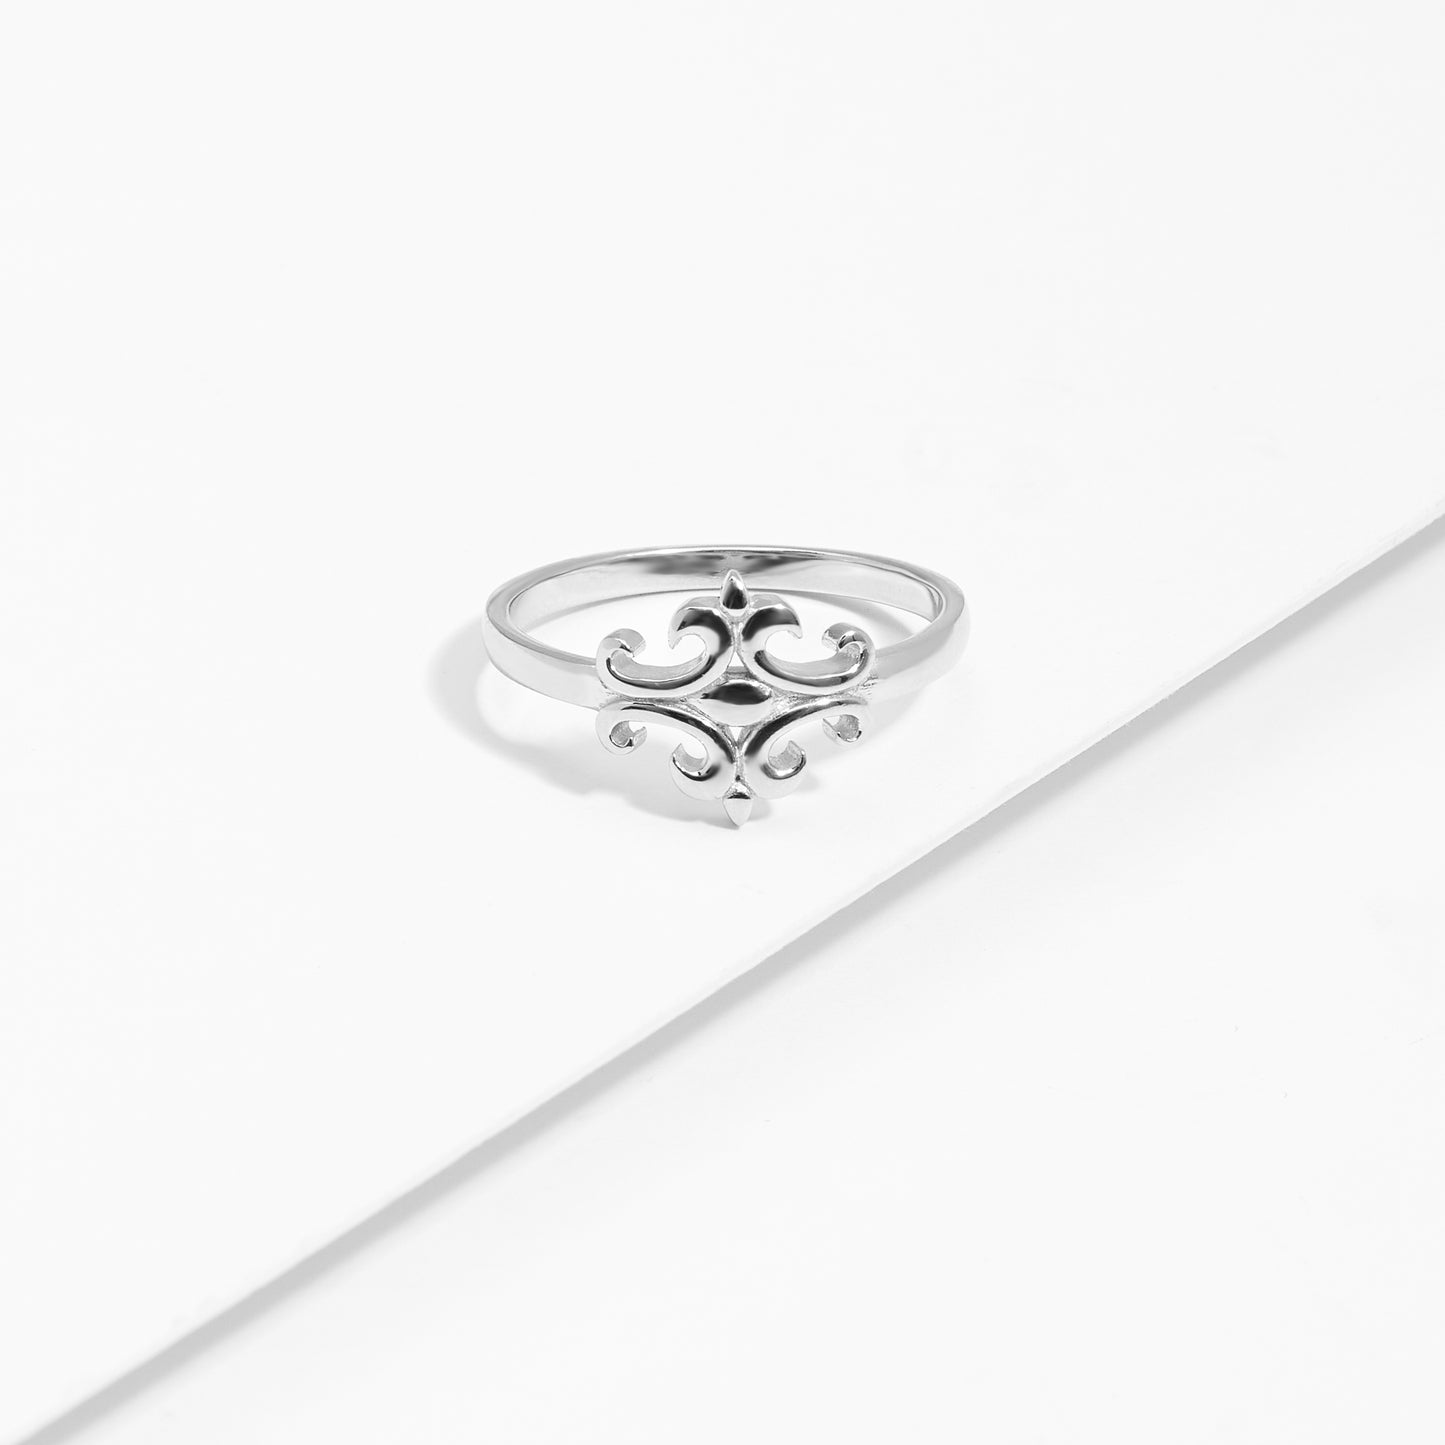 Sterling Silver Fleur De Lis Ring